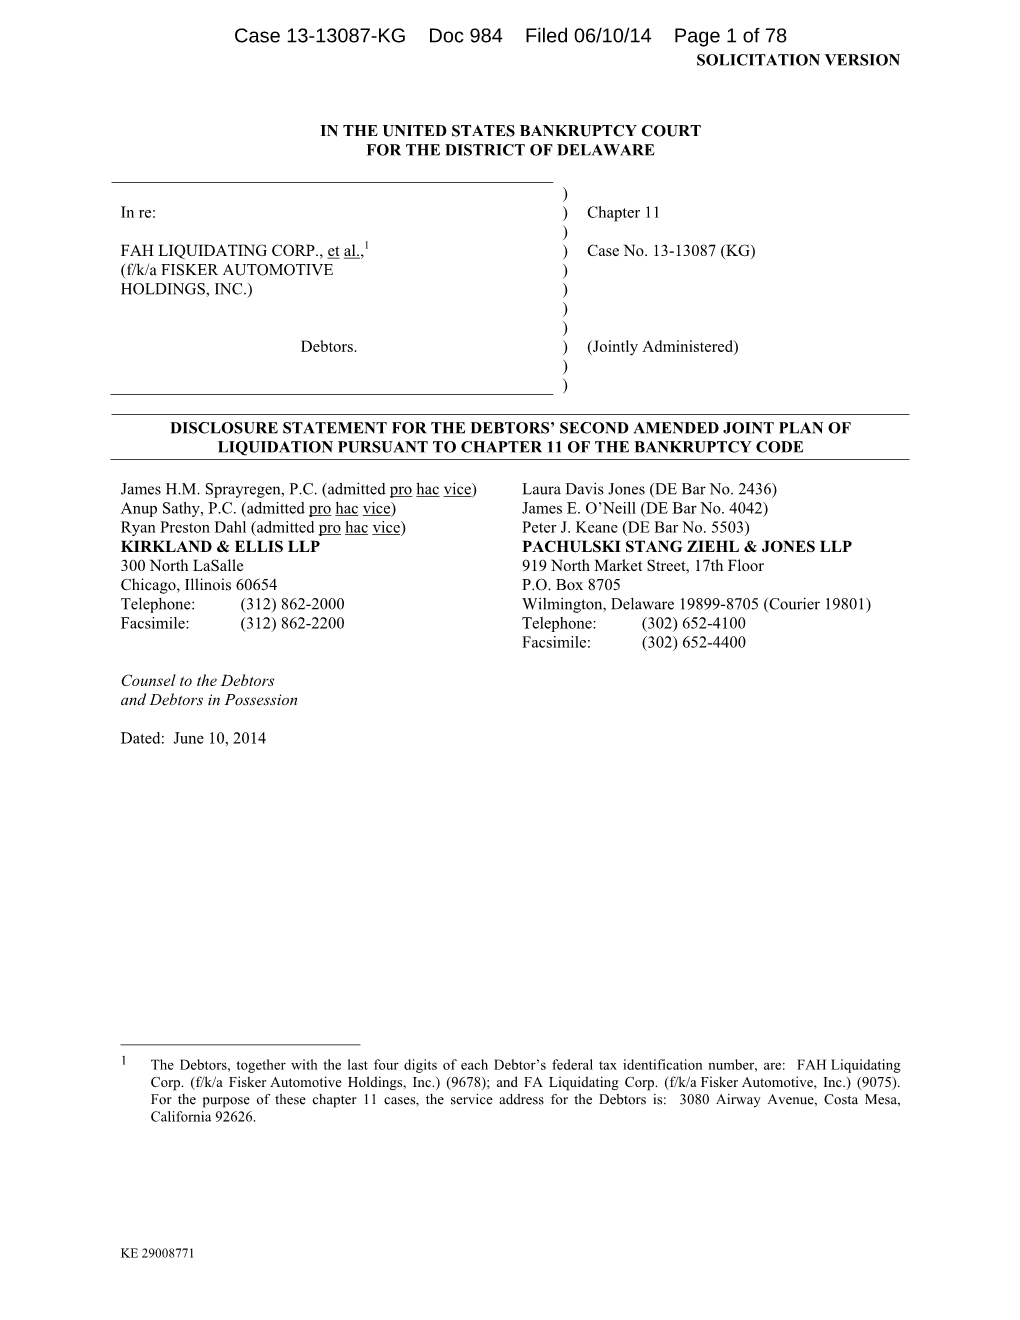 Case 13-13087-KG Doc 984 Filed 06/10/14 Page 1 of 78 SOLICITATION VERSION